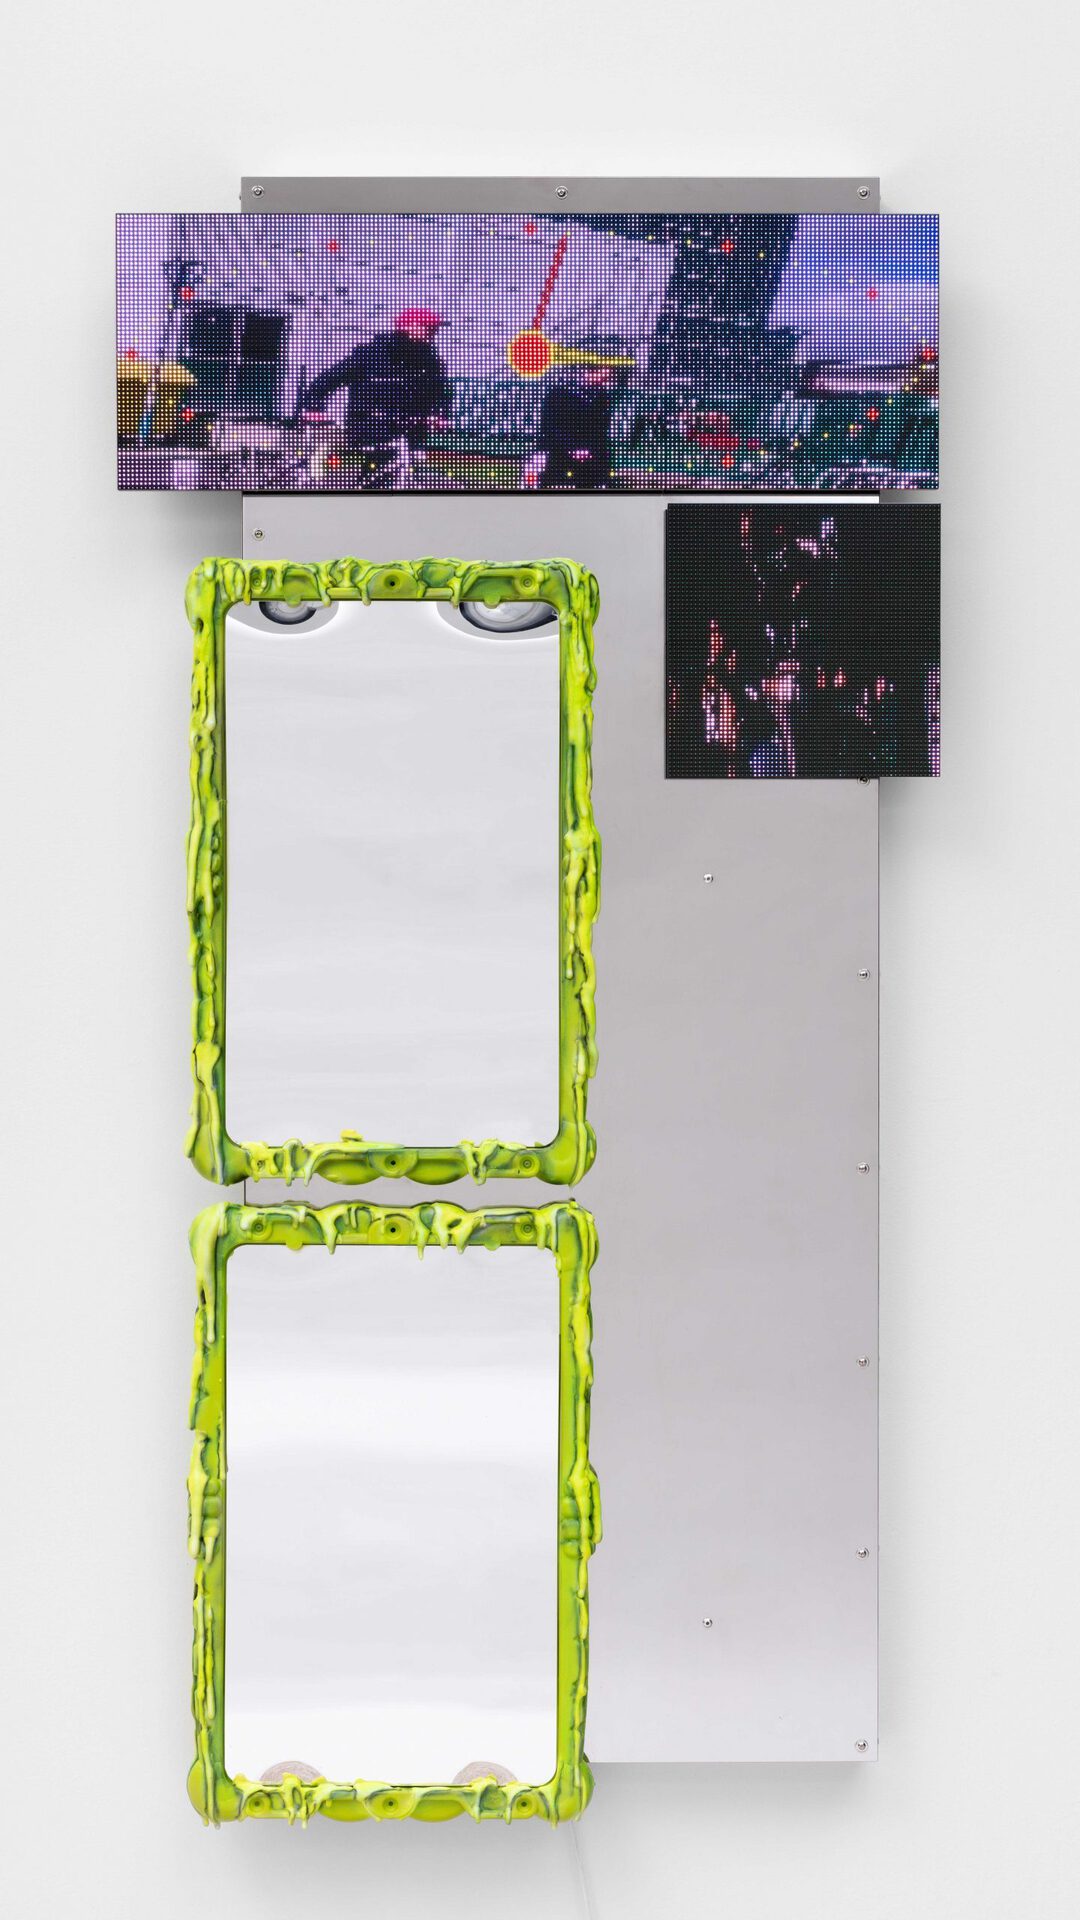 Mathis Altmann, Punch in the face today, 2021, LED matrix screen, video loop ca. 4min., stainless steel mirror, aluminium, funhouse mirror, polyurethane foam, airbrush, 152 x 77 x 10 cm